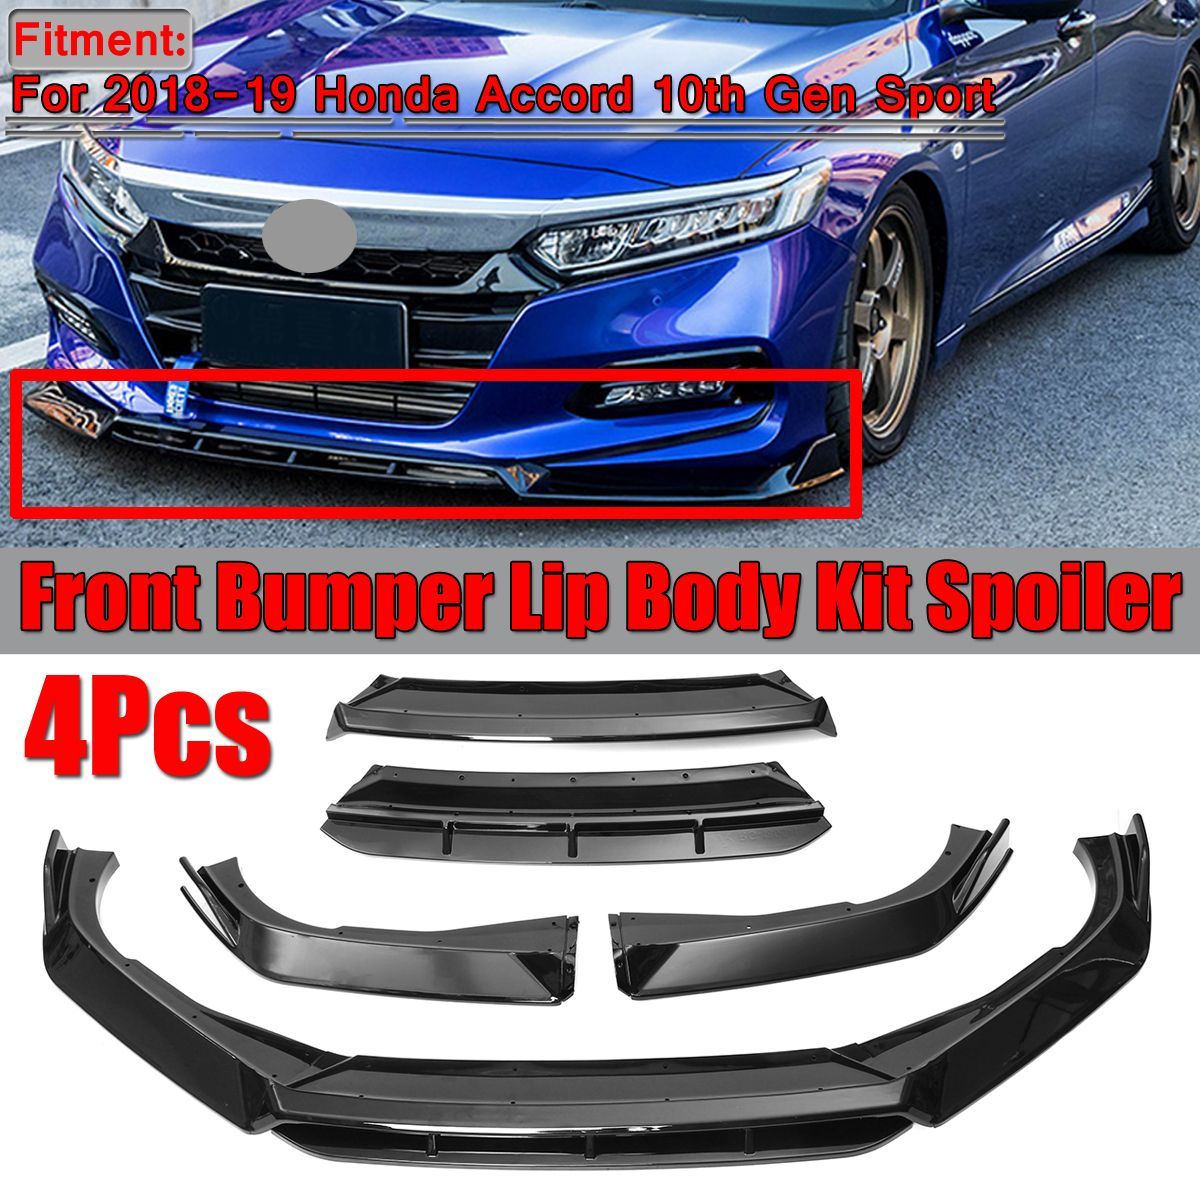 Front-Bumper-Lip-Body-Kit-Spoiler-4PCS-For-Honda-Accord-10th-Gen-Sport-2018-2019-1746134